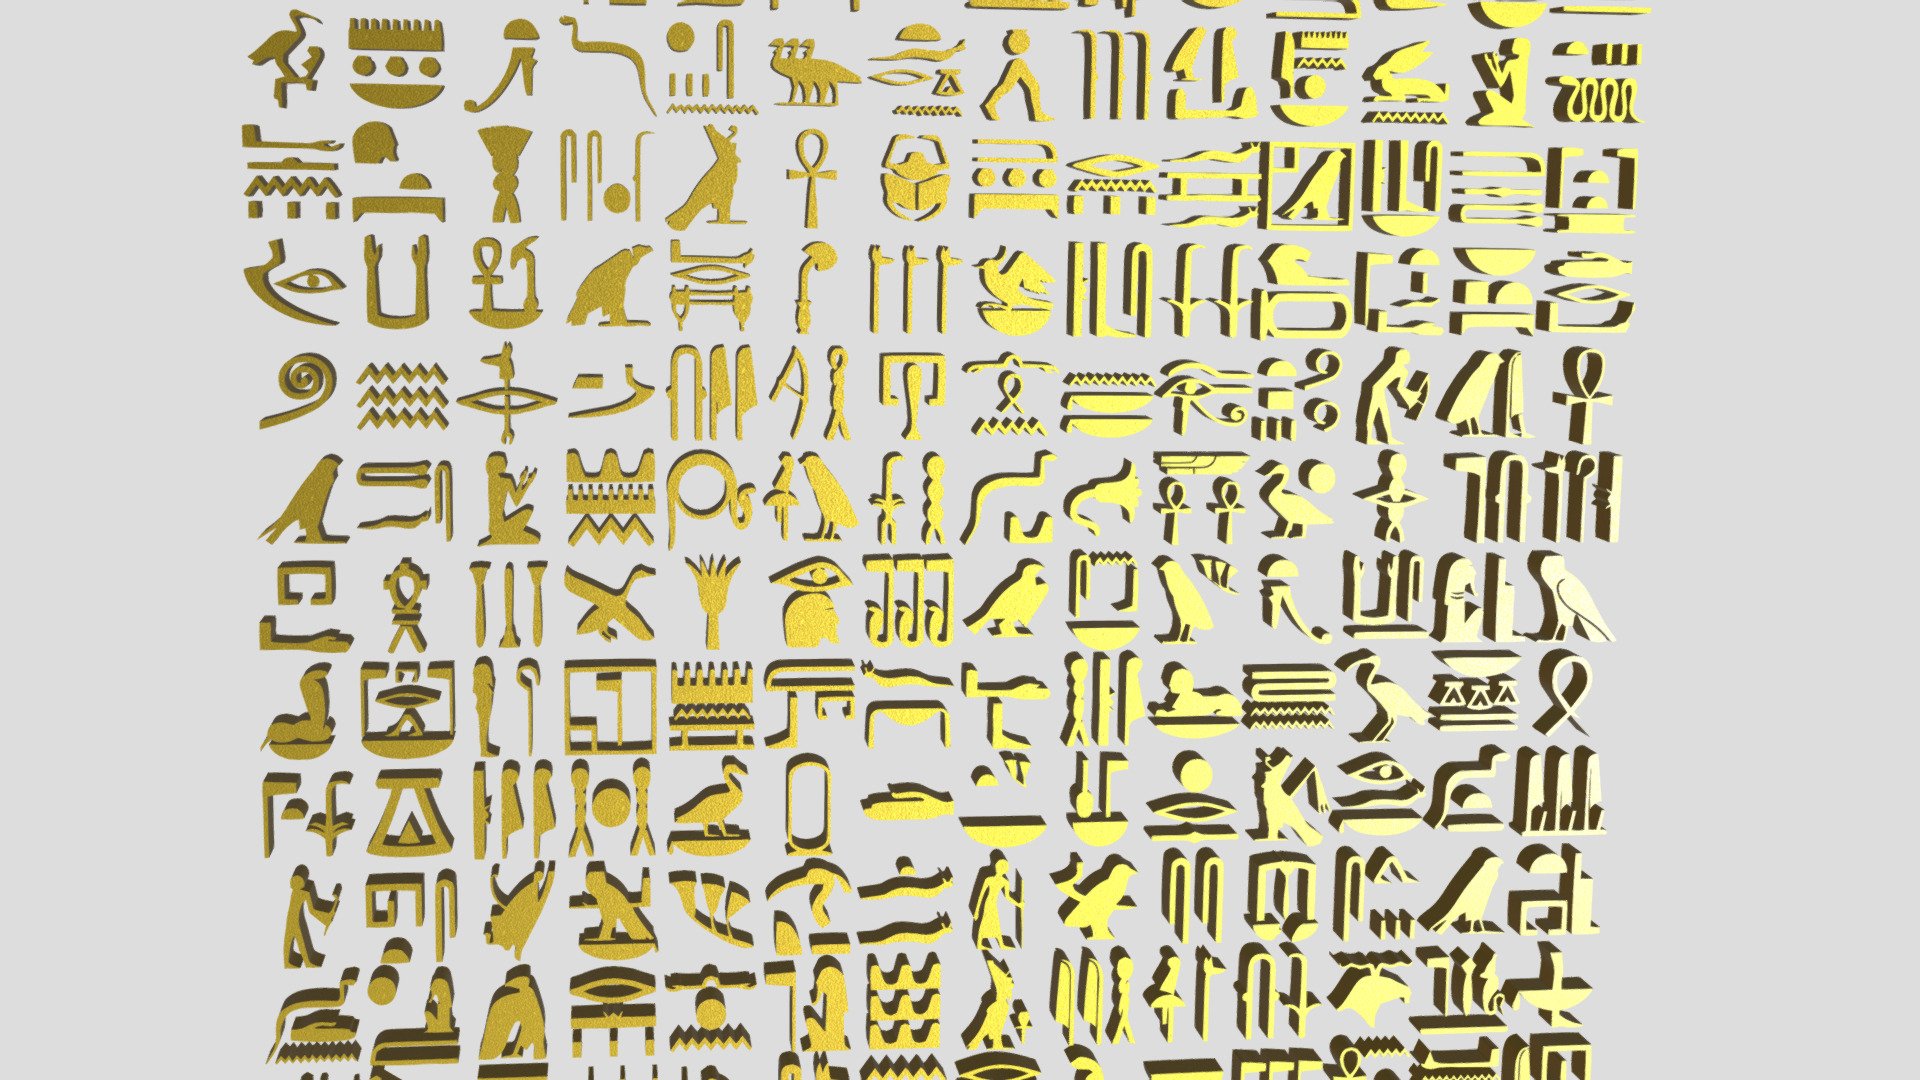 hieroglyphs - Egyptian symbols (free)

https://es.wikipedia.org/wiki/Jerogl%C3%ADficos_egipcios - Hieroglyph - Egyptian symbols (free) - Download Free 3D model by vmmaniac 3d model